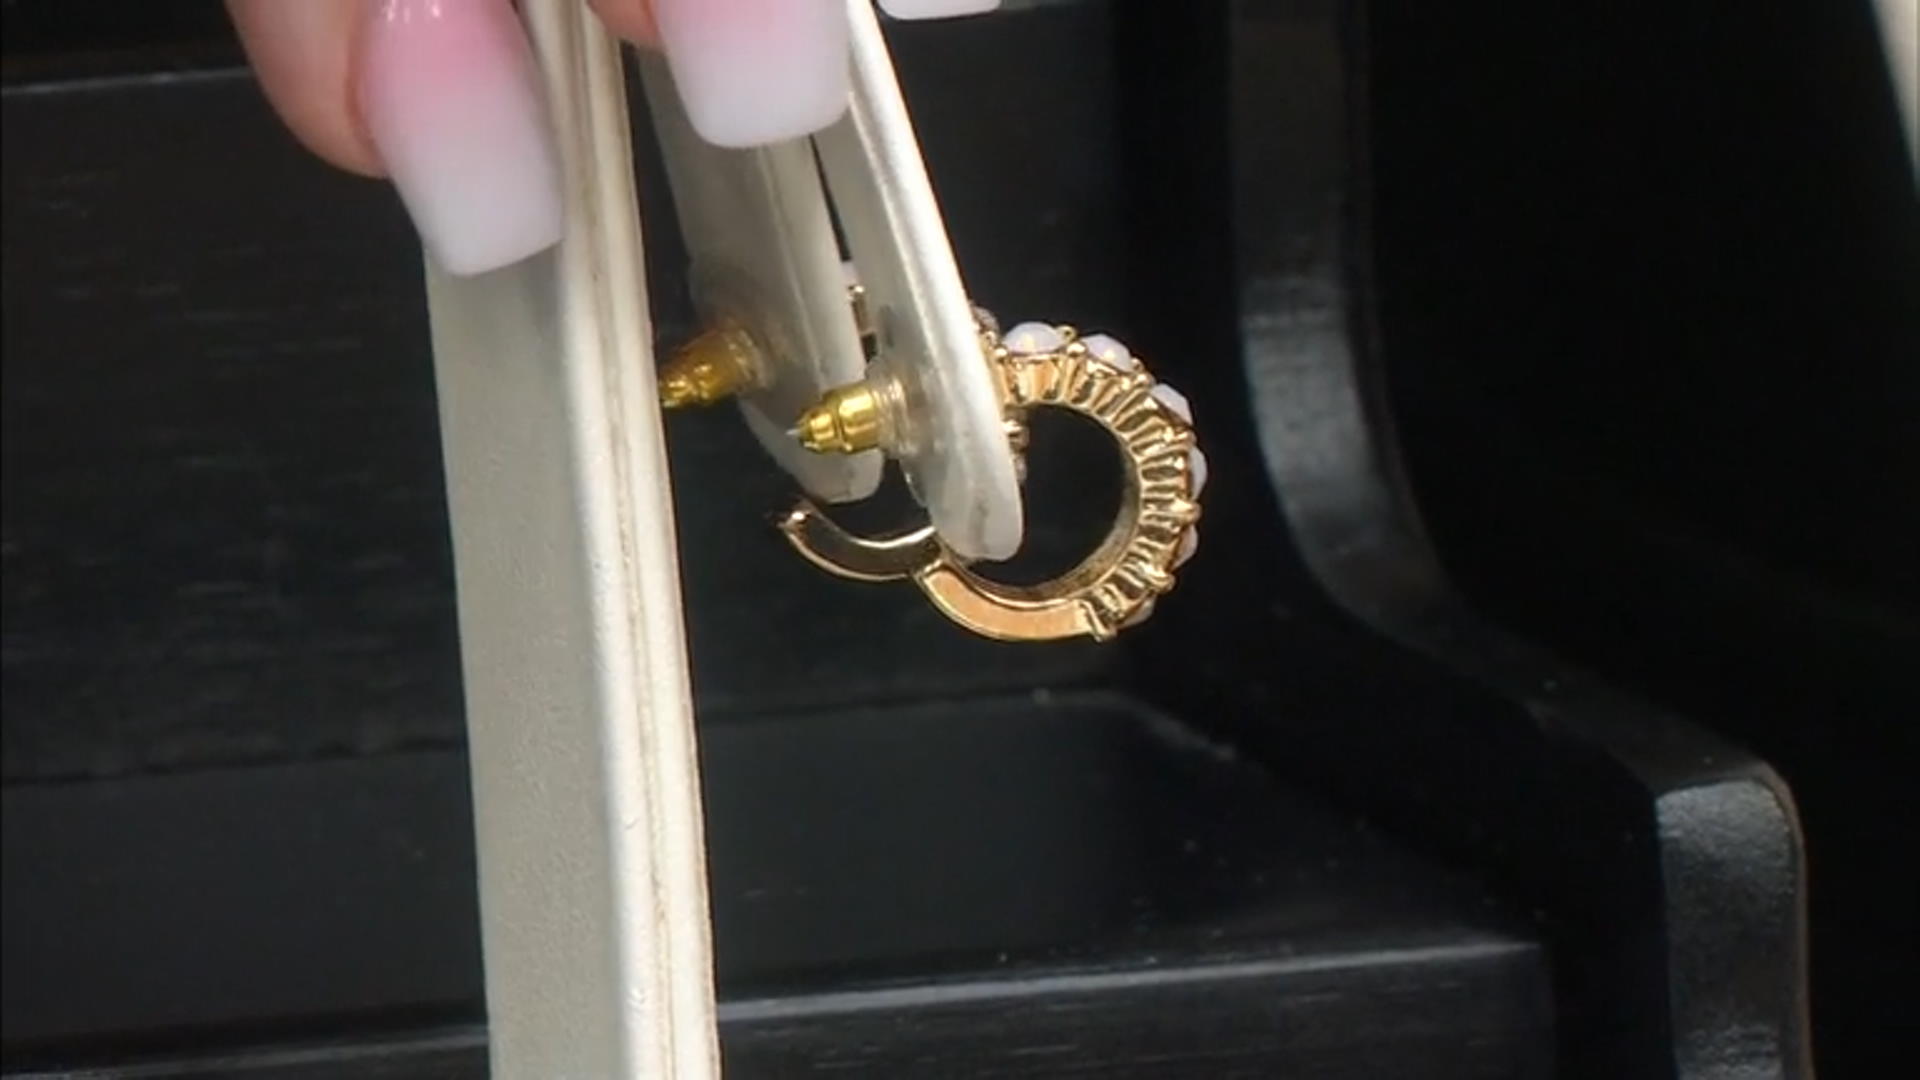 Multi-Color Crystal Gold Tone Set of 7 Huggie Earrings Video Thumbnail